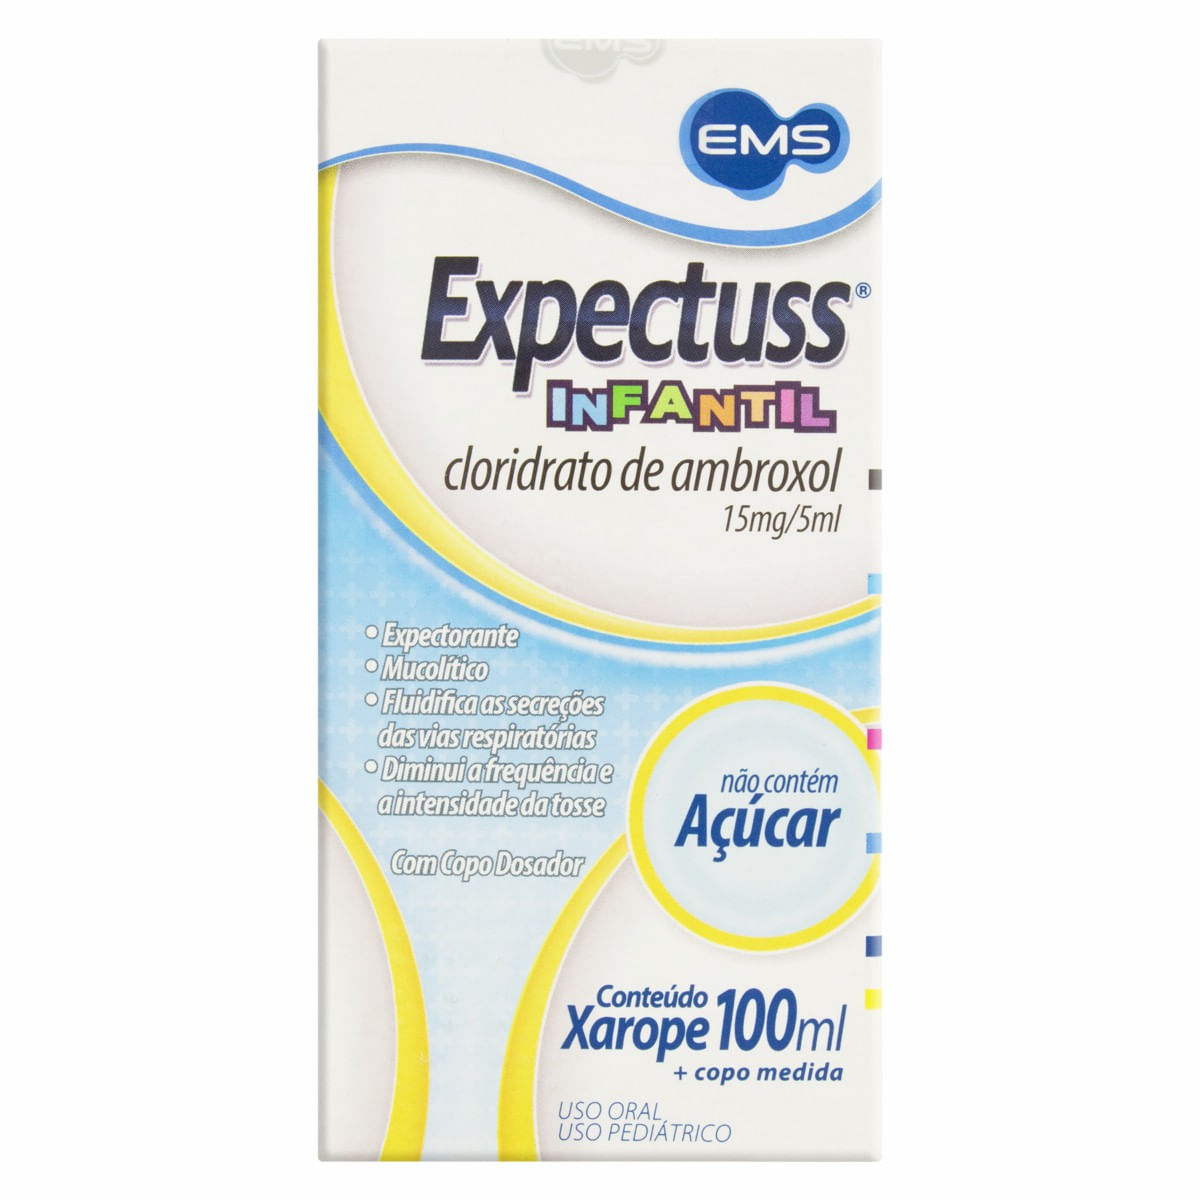 Expectuss Infantil Xarope 100ml - precopopular